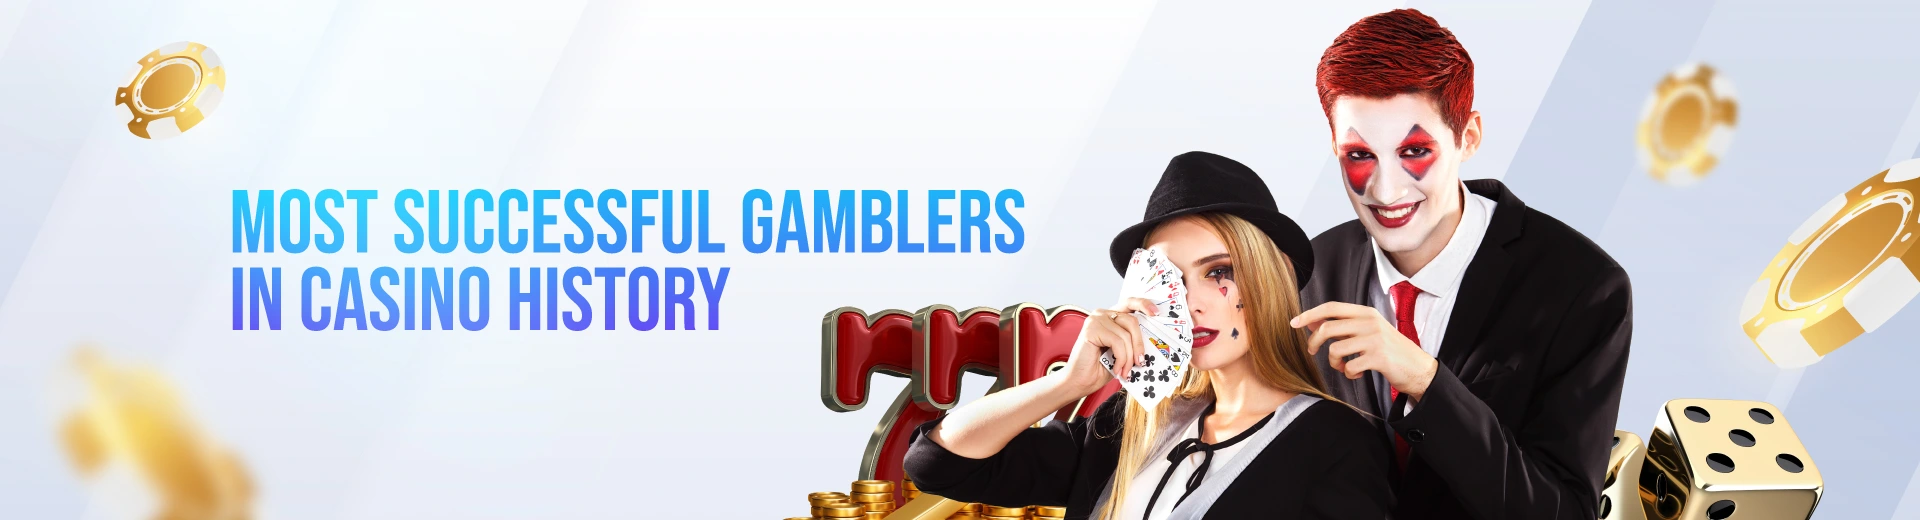 OkBet Most Successful Gamblers in Casino History